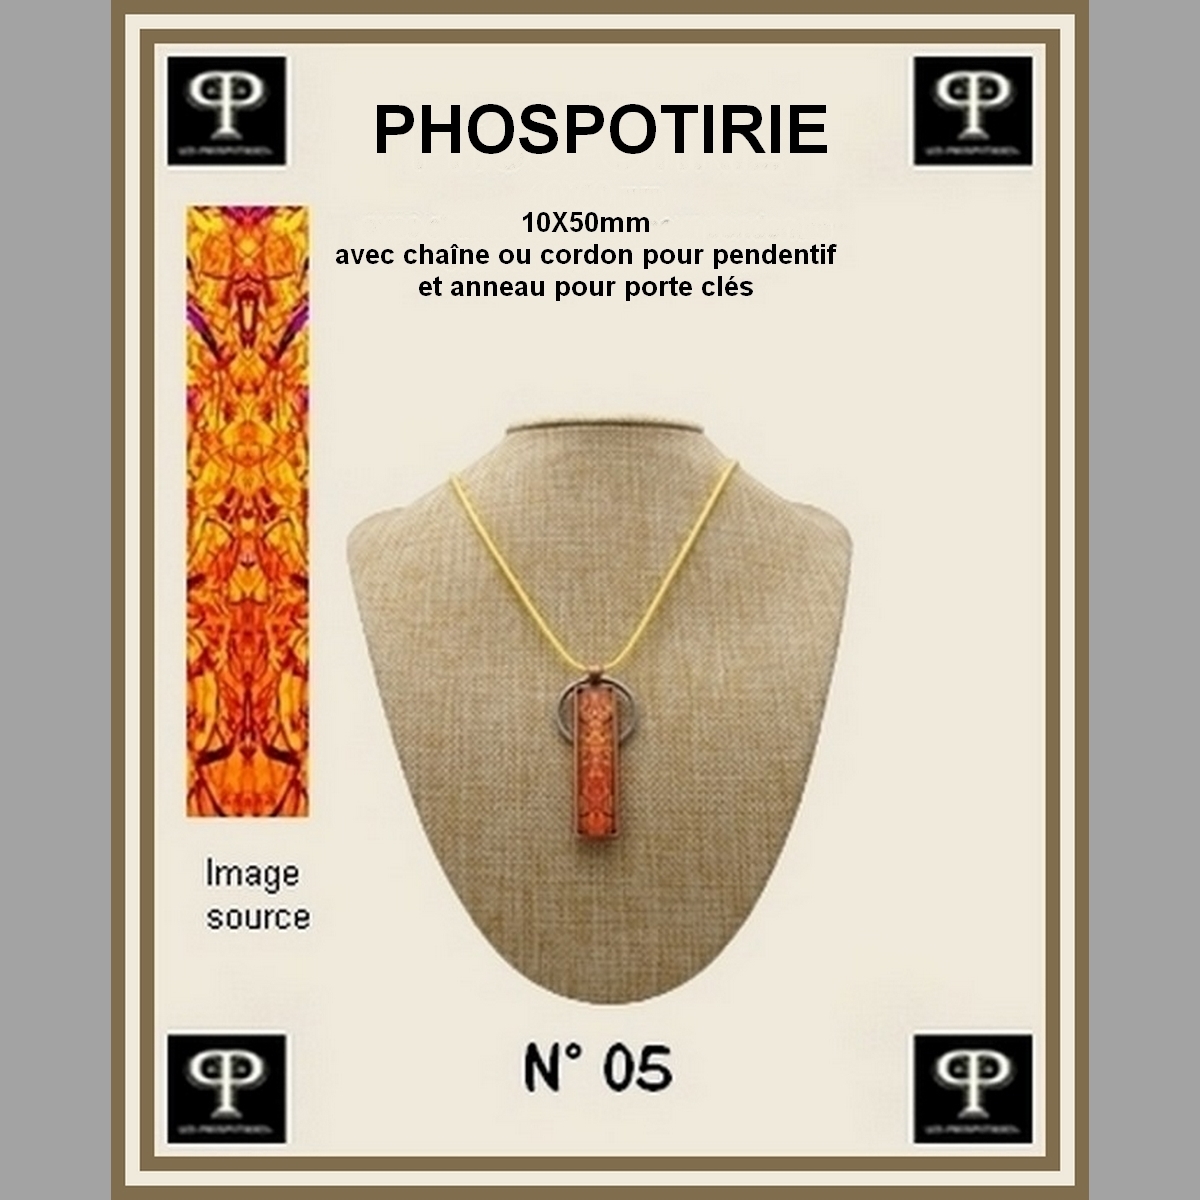 Phospotirie version TOTEM 10X50 mm N°05 pour pendentifs ou porte-clés